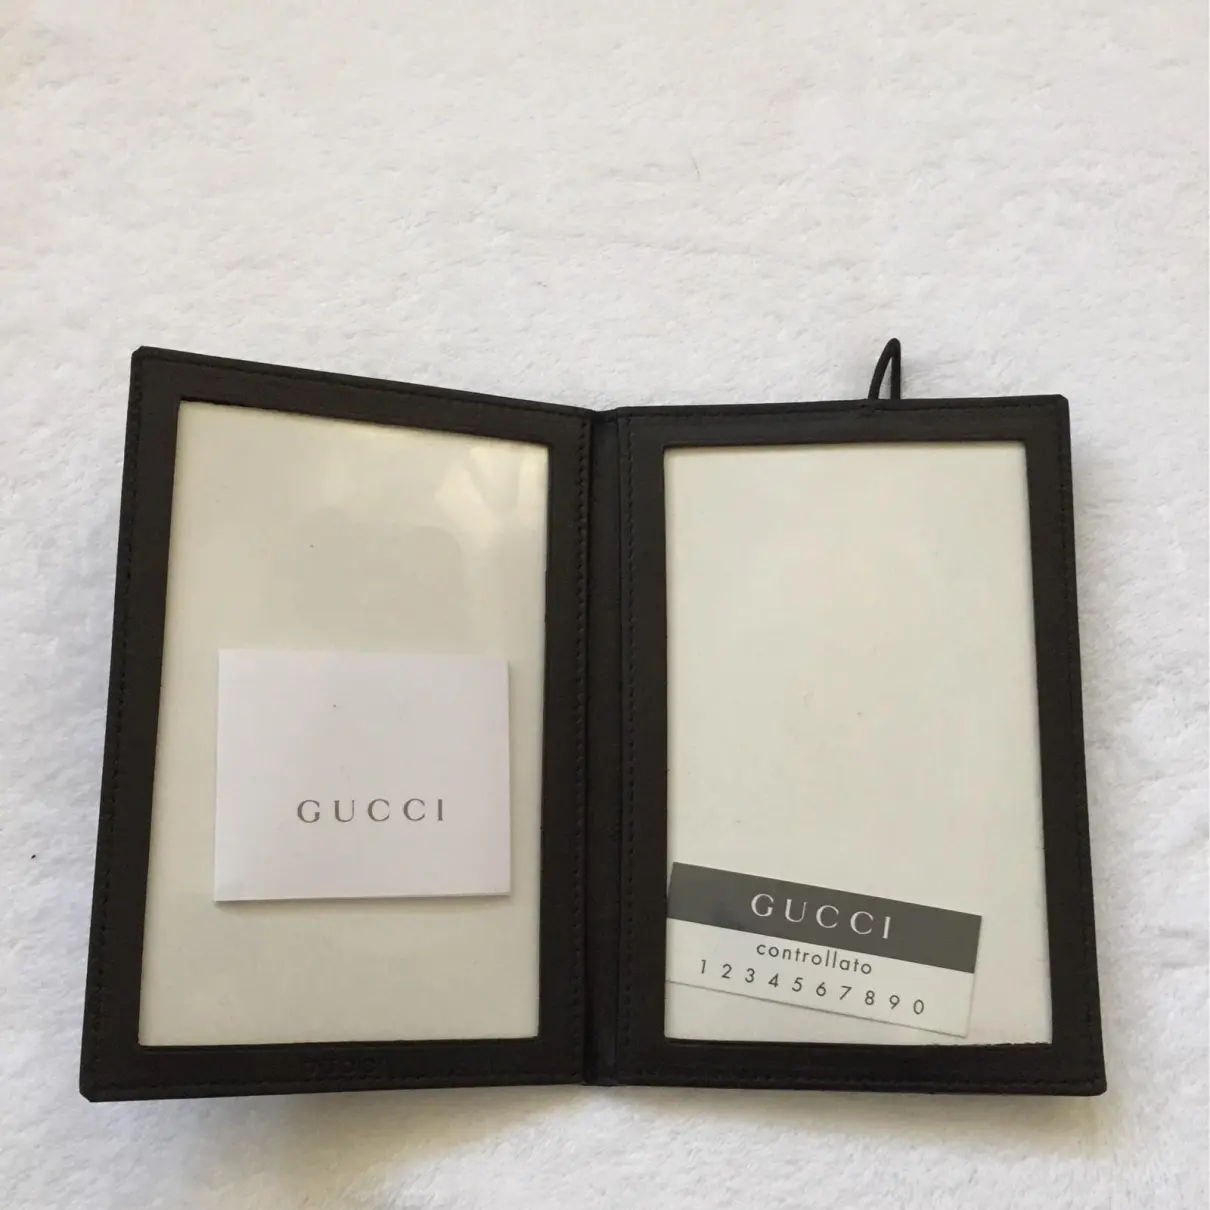 Gucci Black Leather Purse for sale